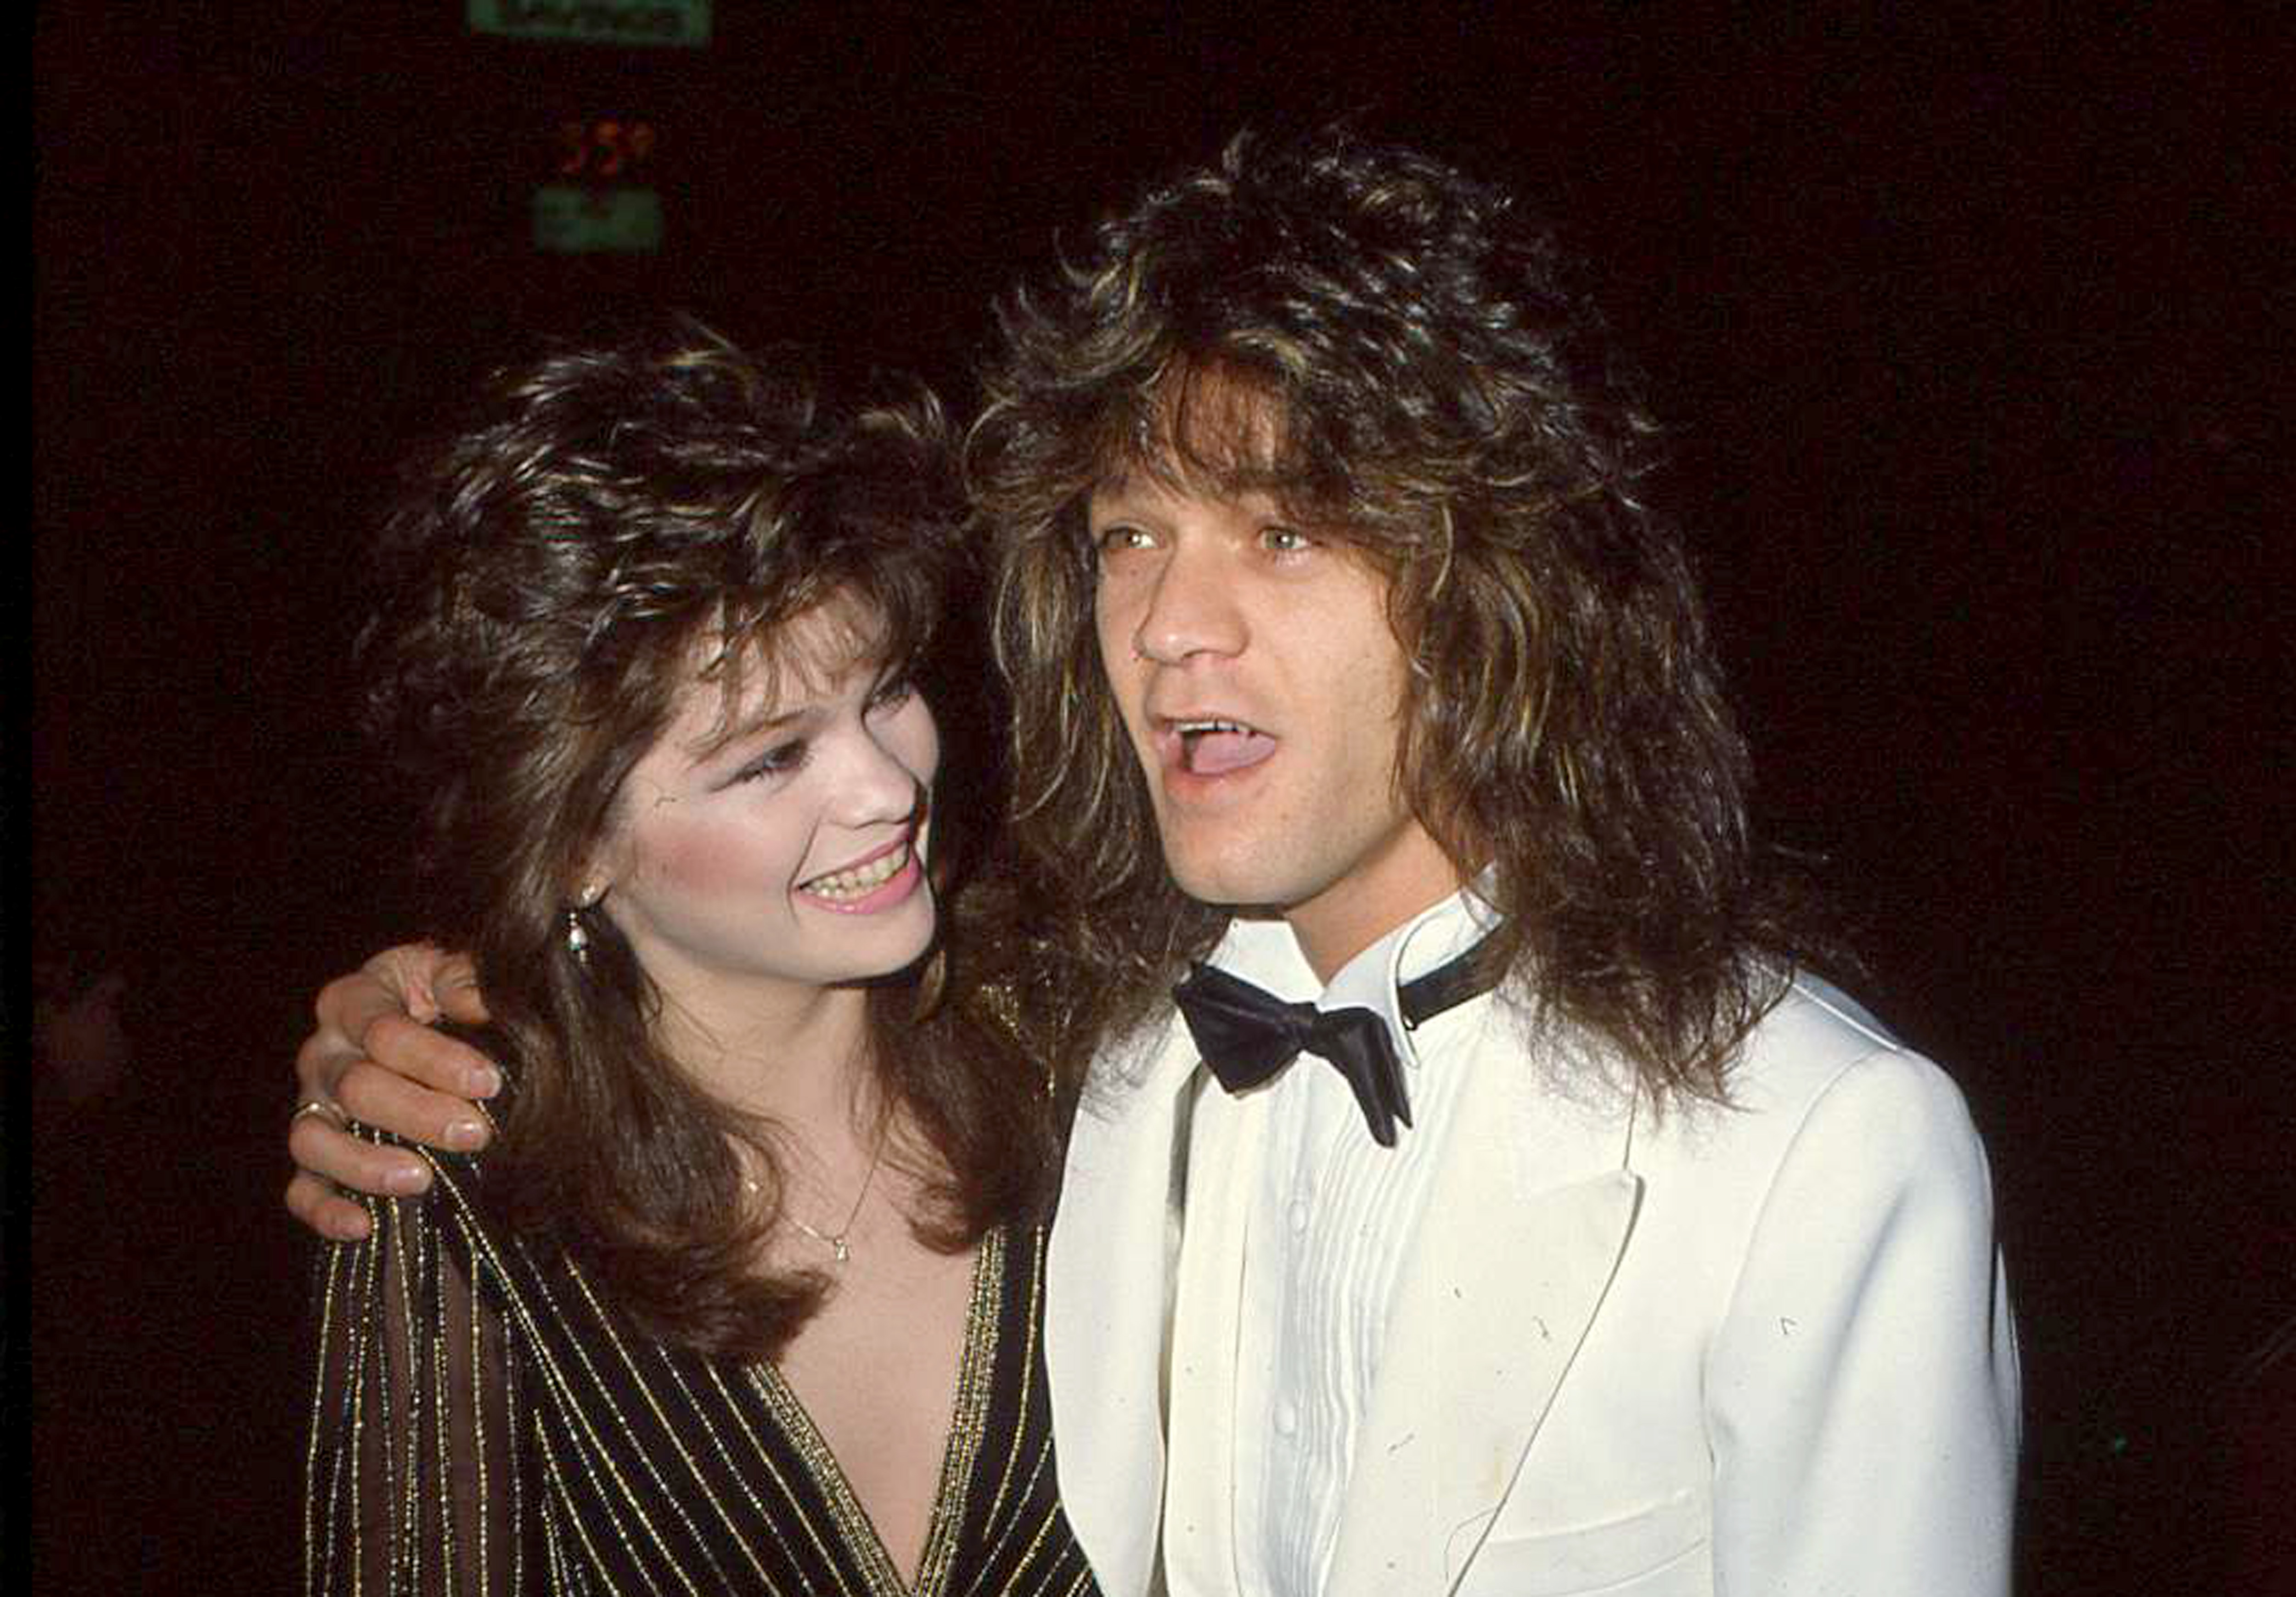 Valerie Bertinelli and Eddie Van Halen at a restaurant in Beverly Hills, California on March 20, 1983 | Source: Getty Images